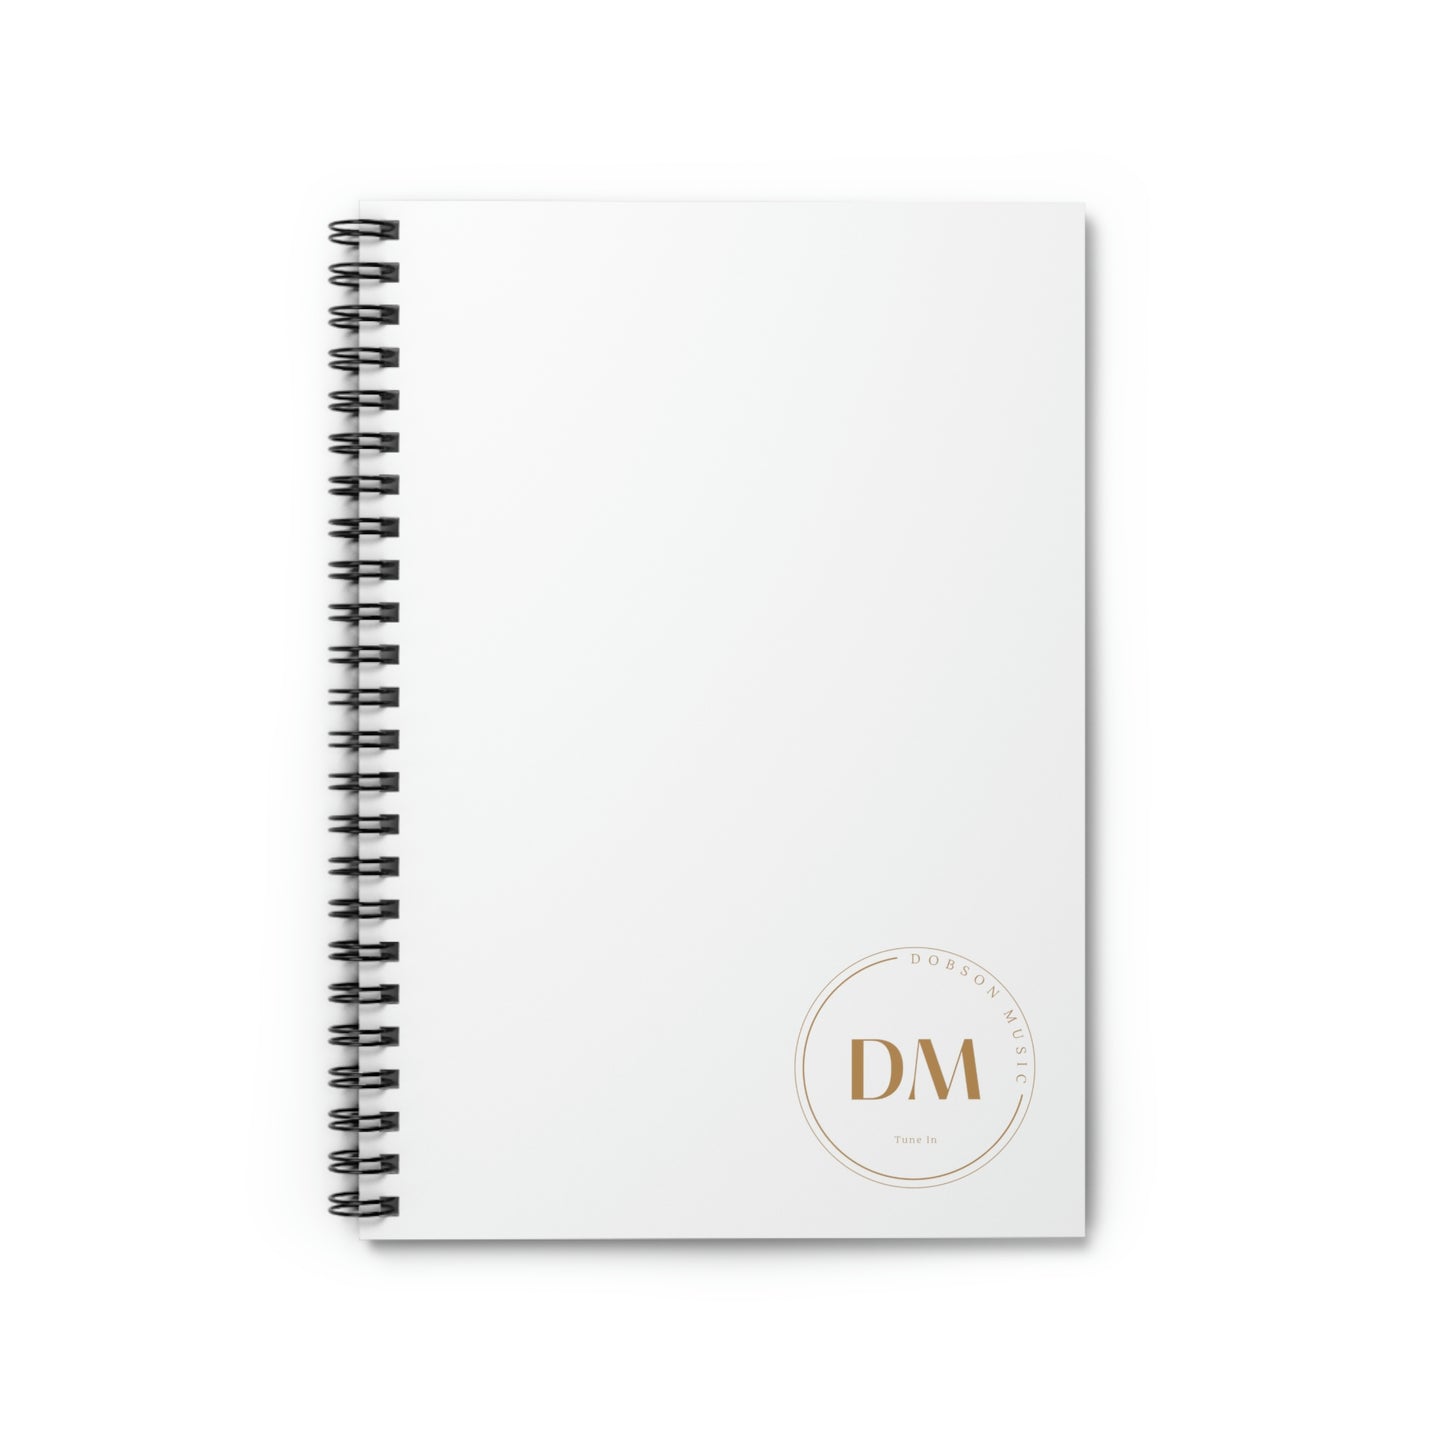 DM Spiral Notebook - Ruled Line